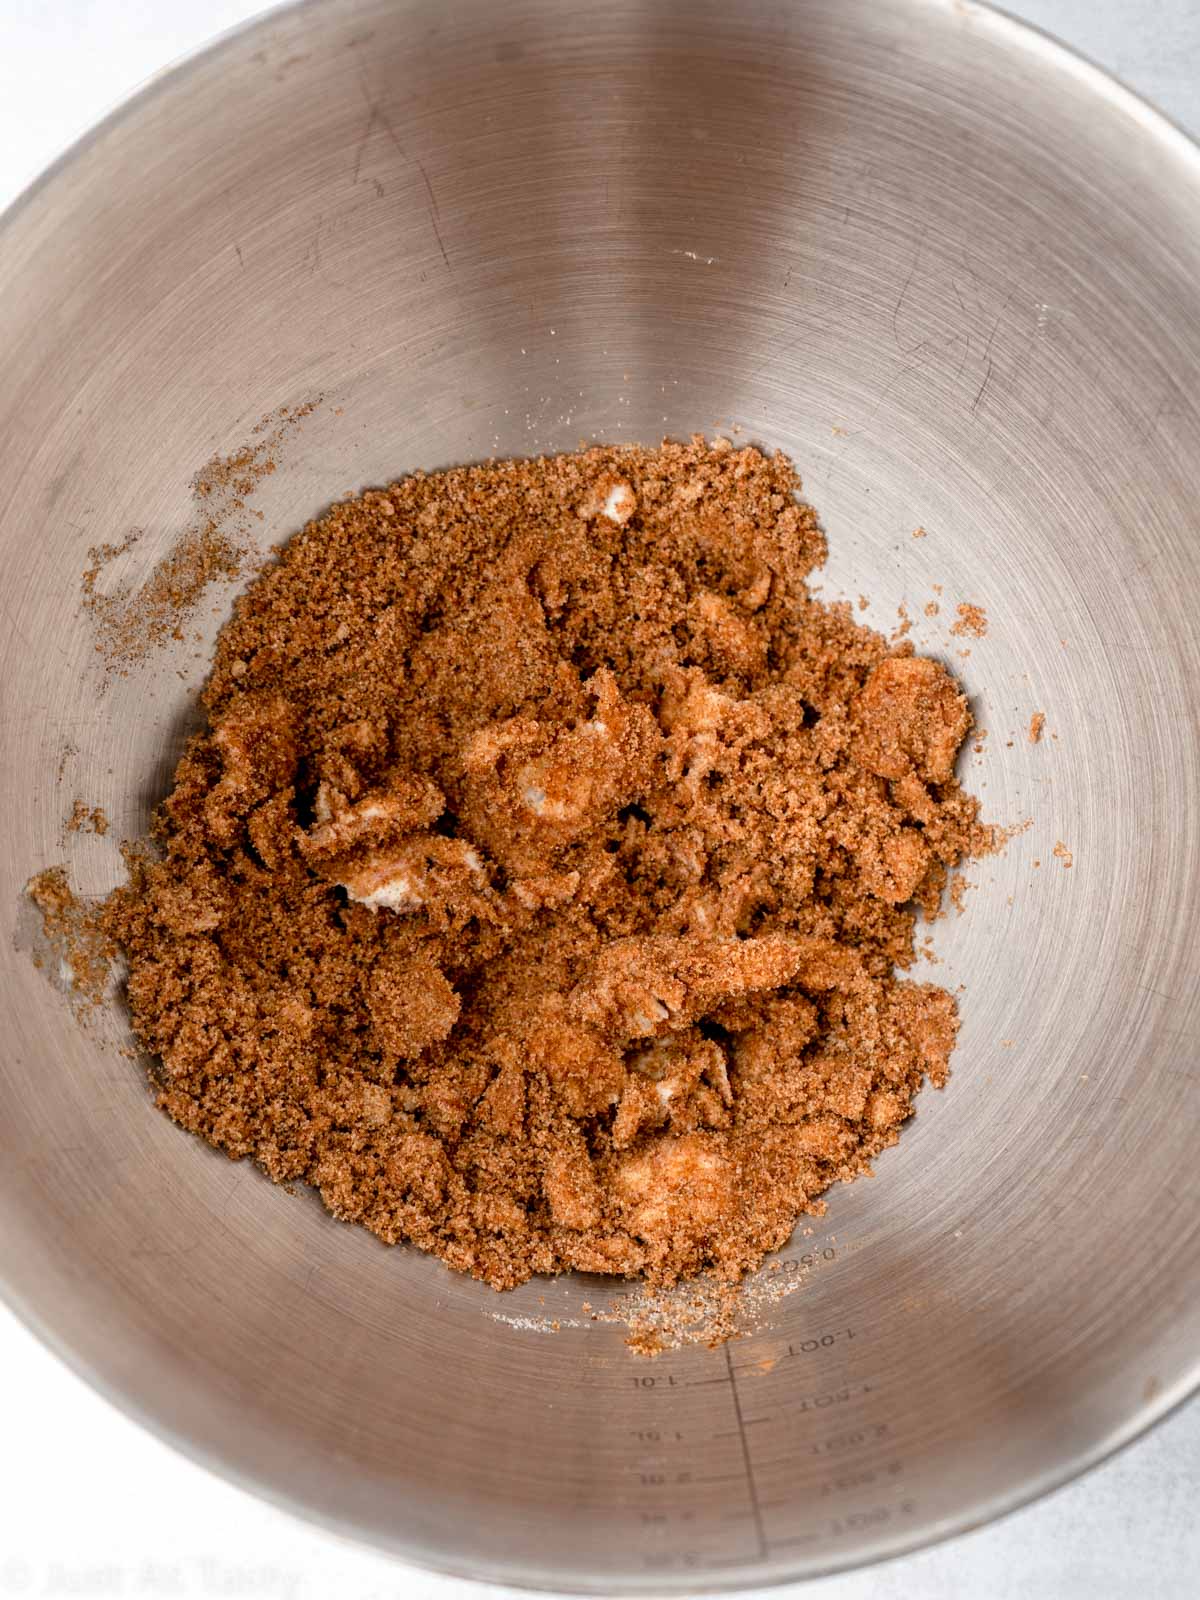 Cinnamon roll filling in a bowl.